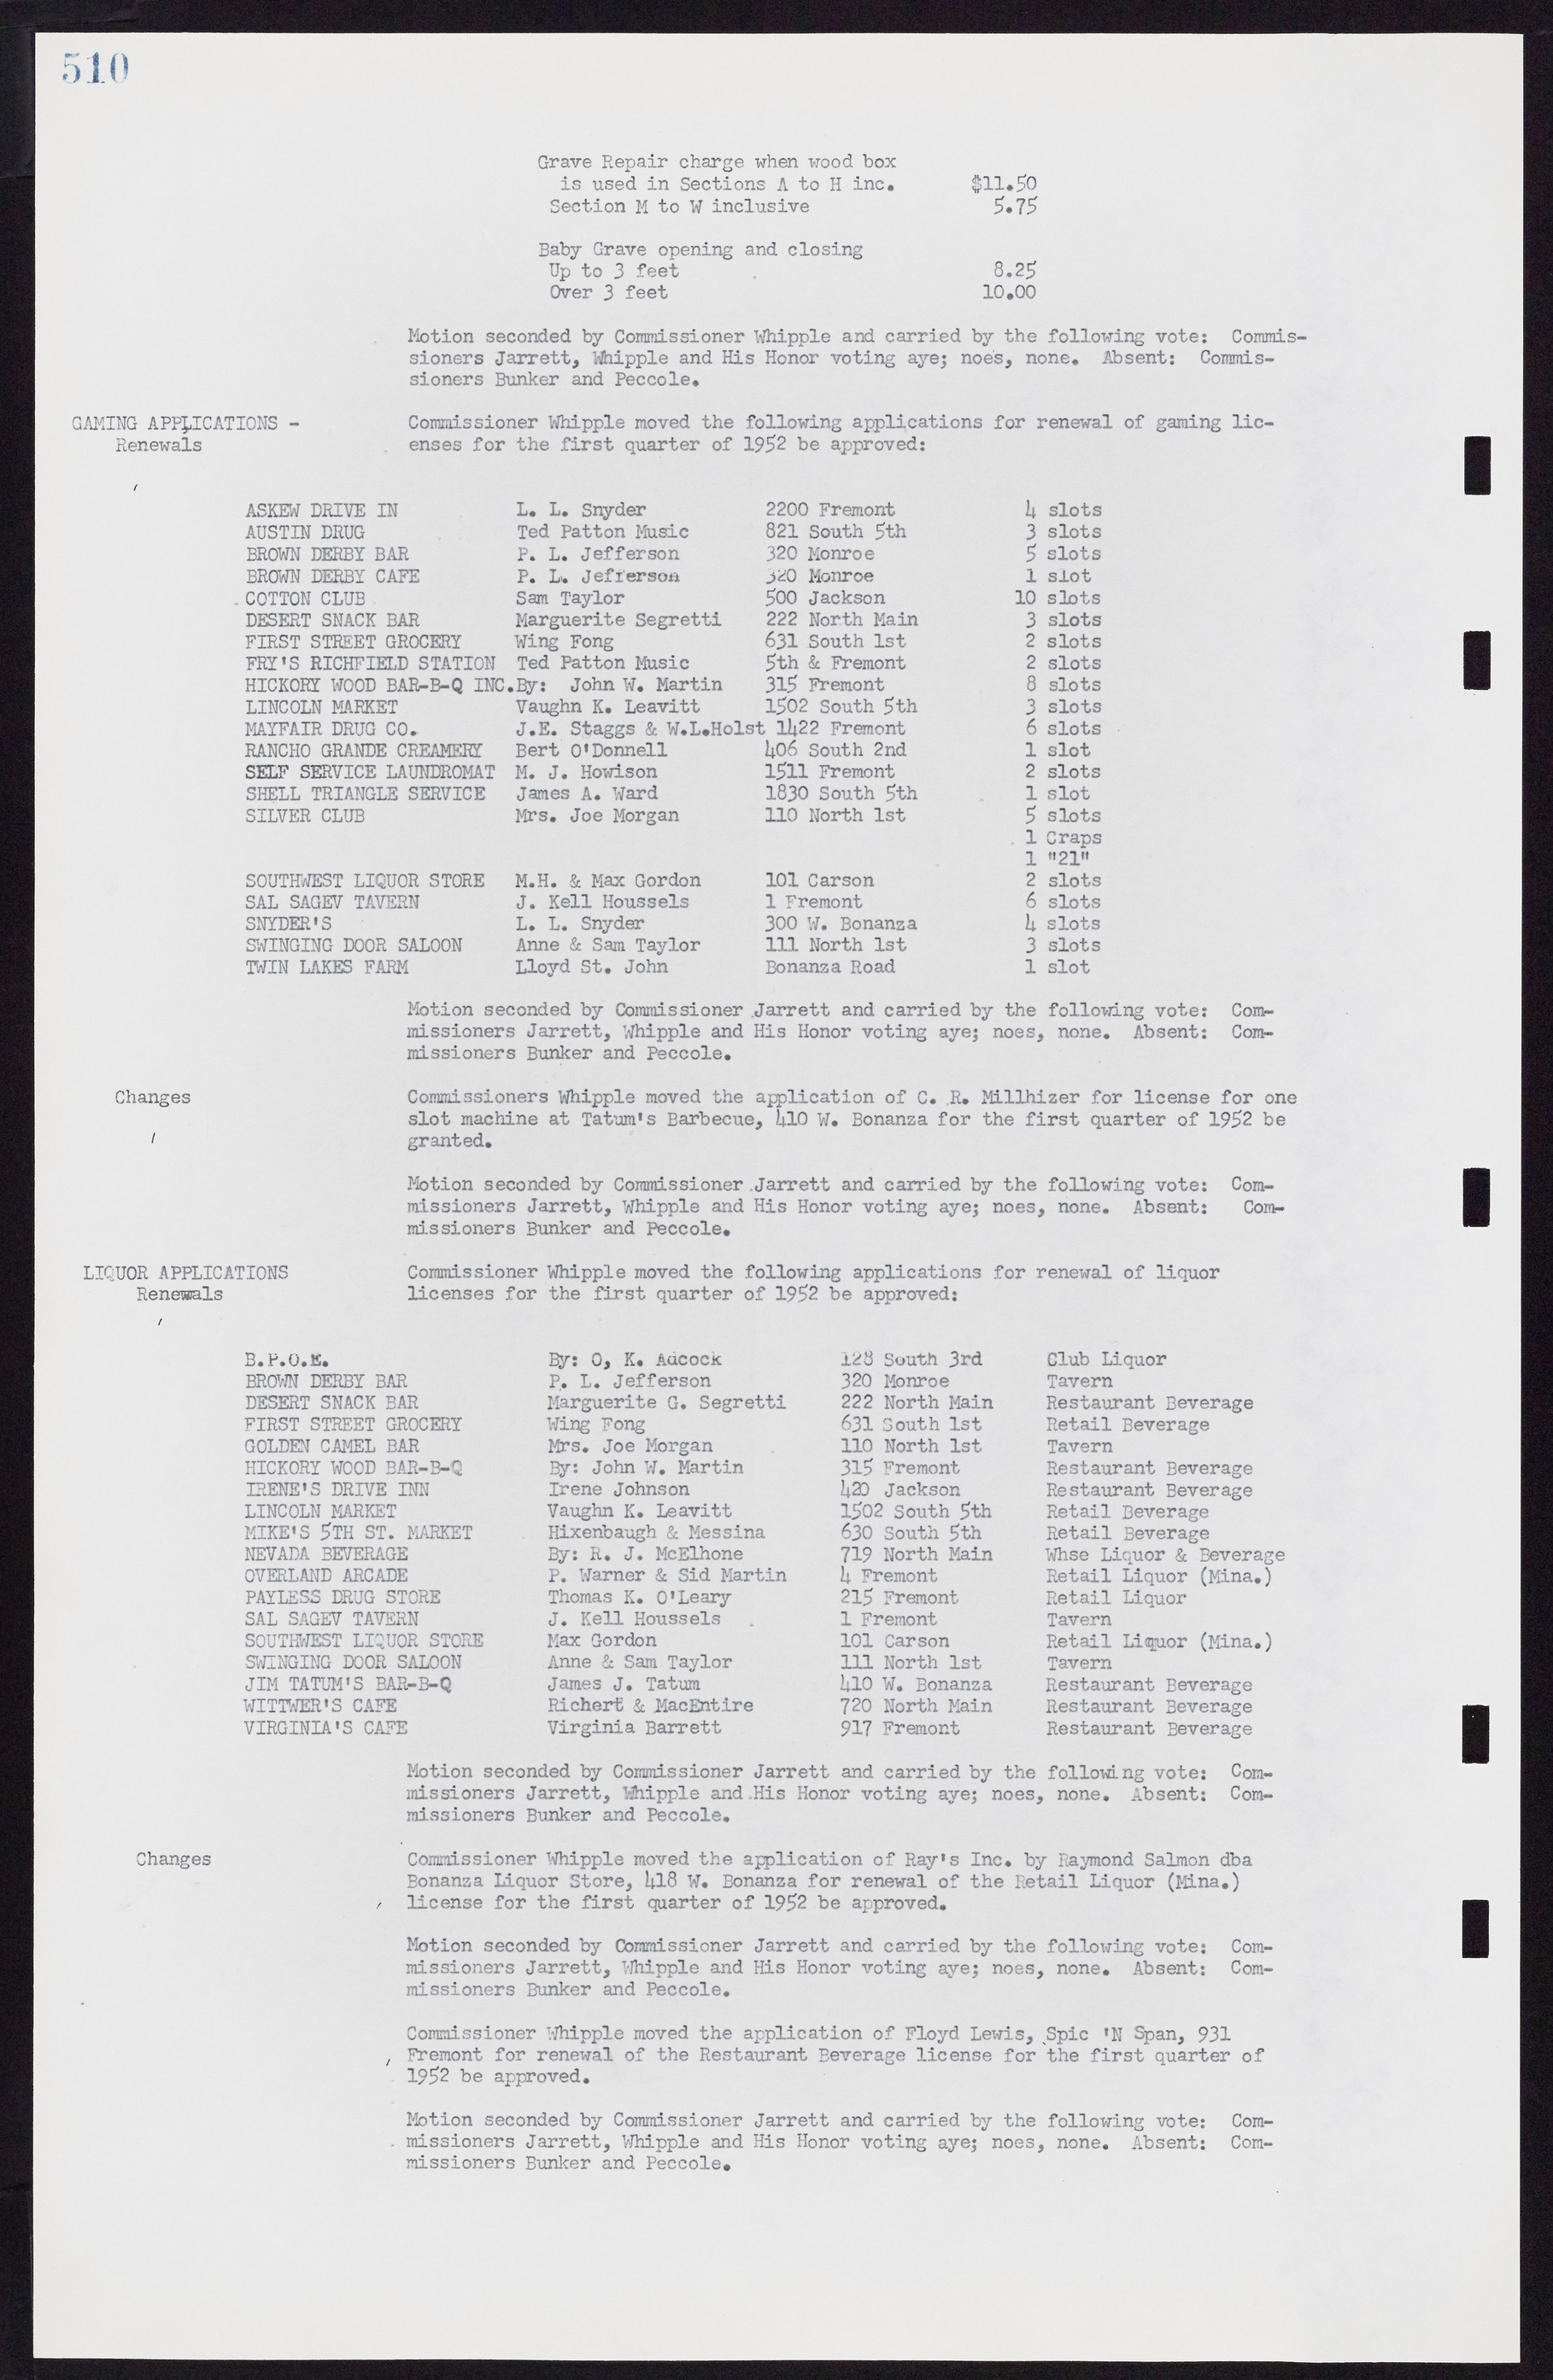 Las Vegas City Commission Minutes, November 7, 1949 to May 21, 1952, lvc000007-528